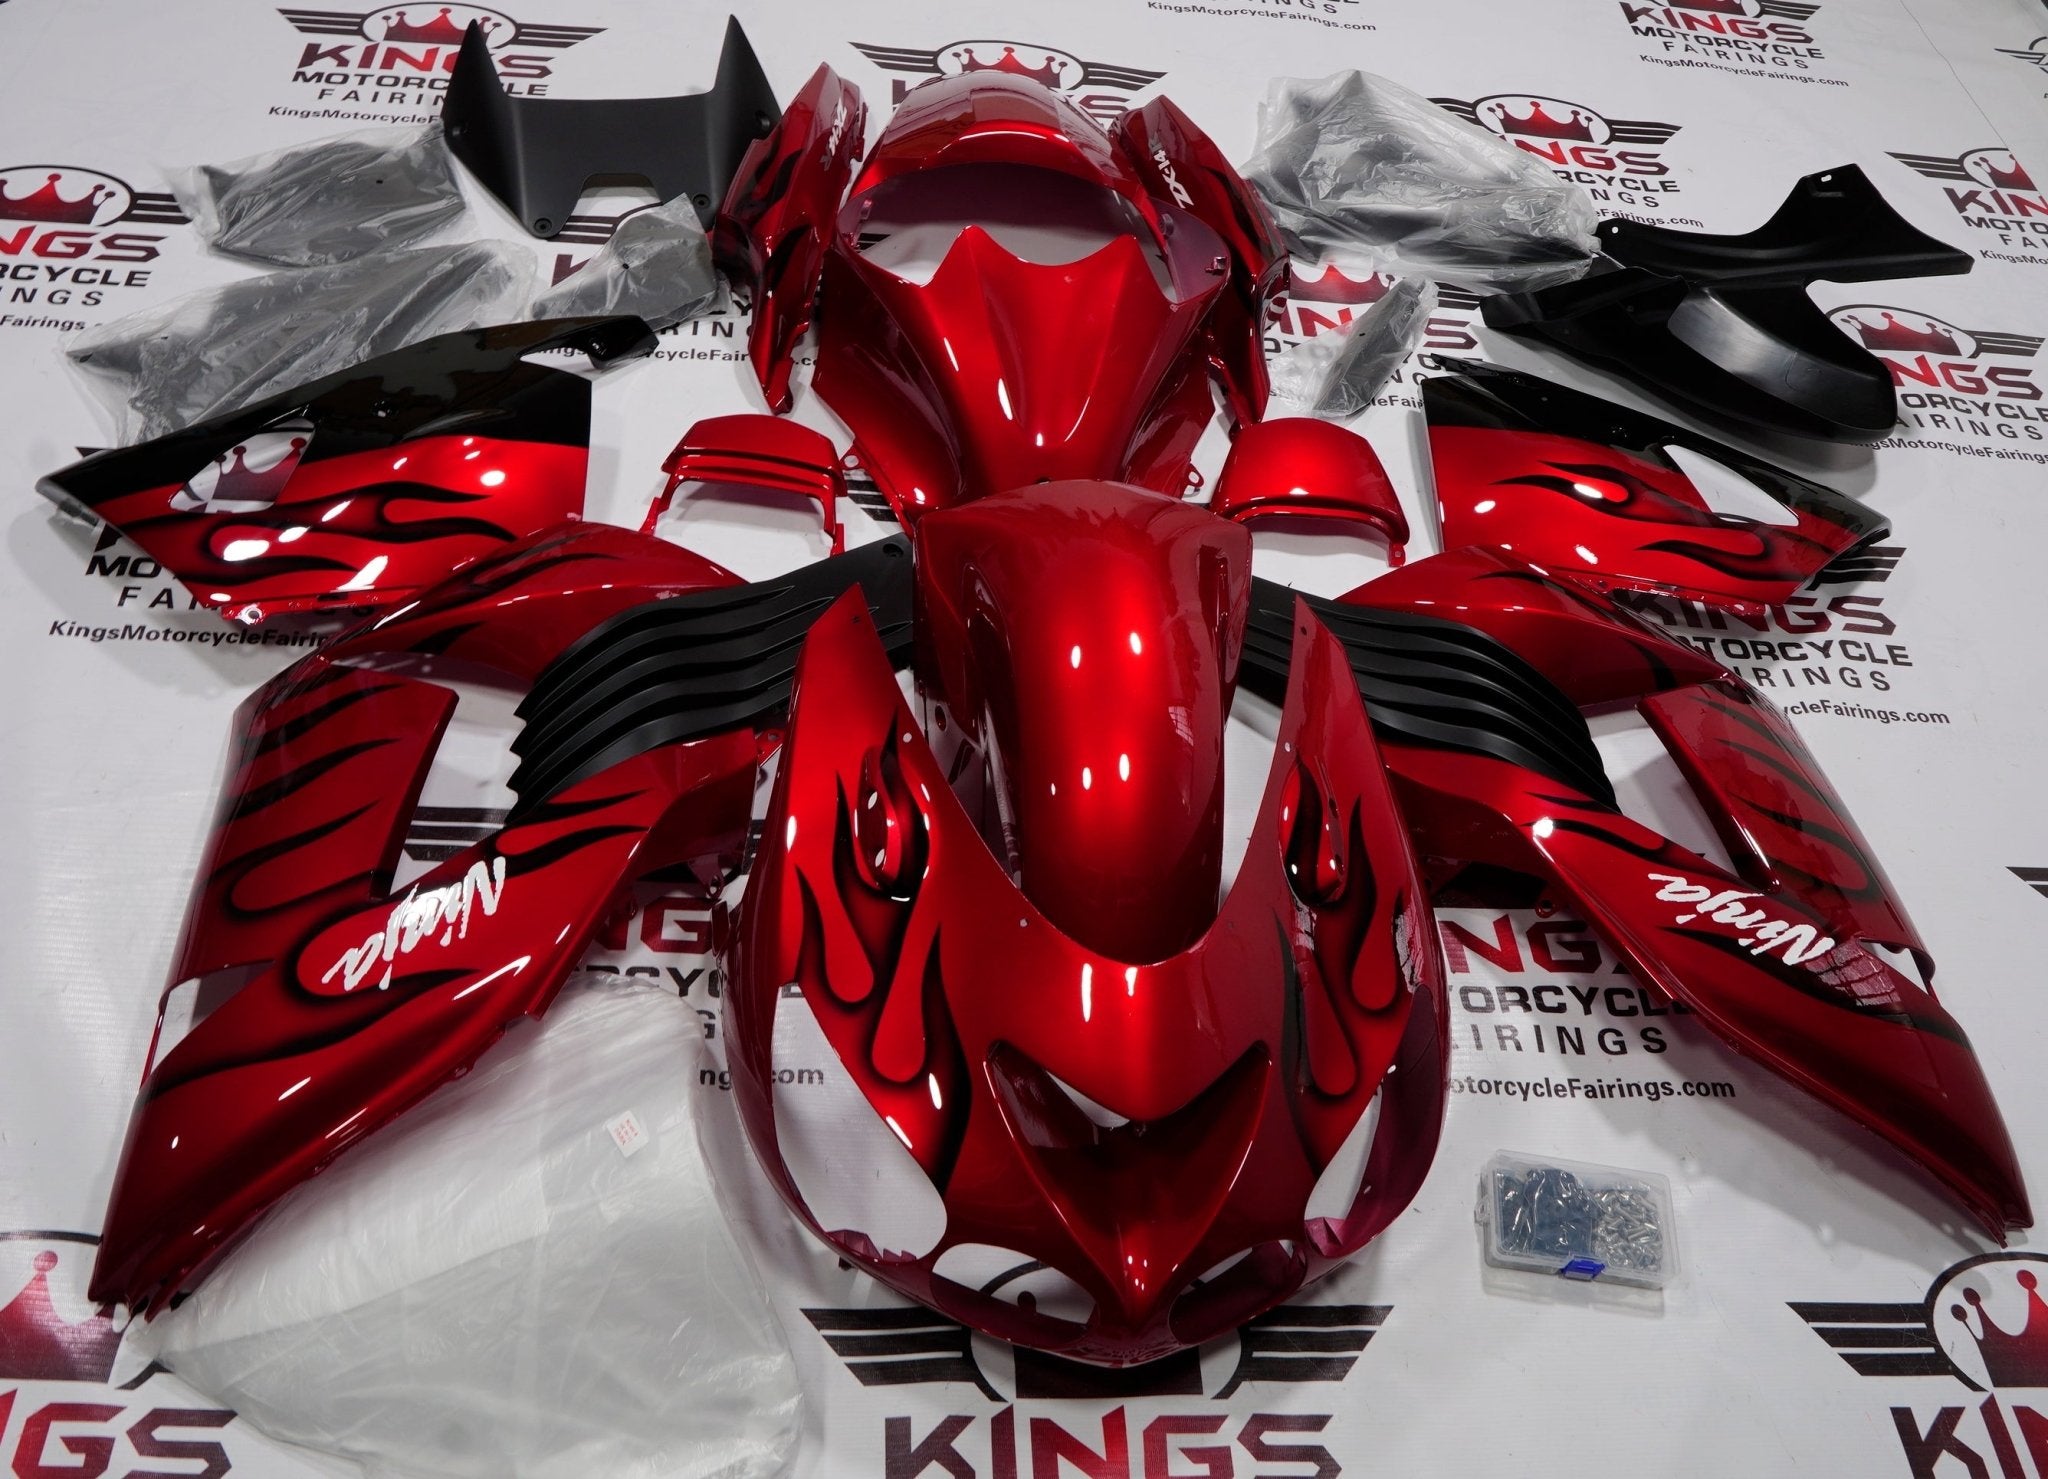 Fairing kit for a Kawasaki Ninja ZX14R (2006-2011) Candy Red & Black F